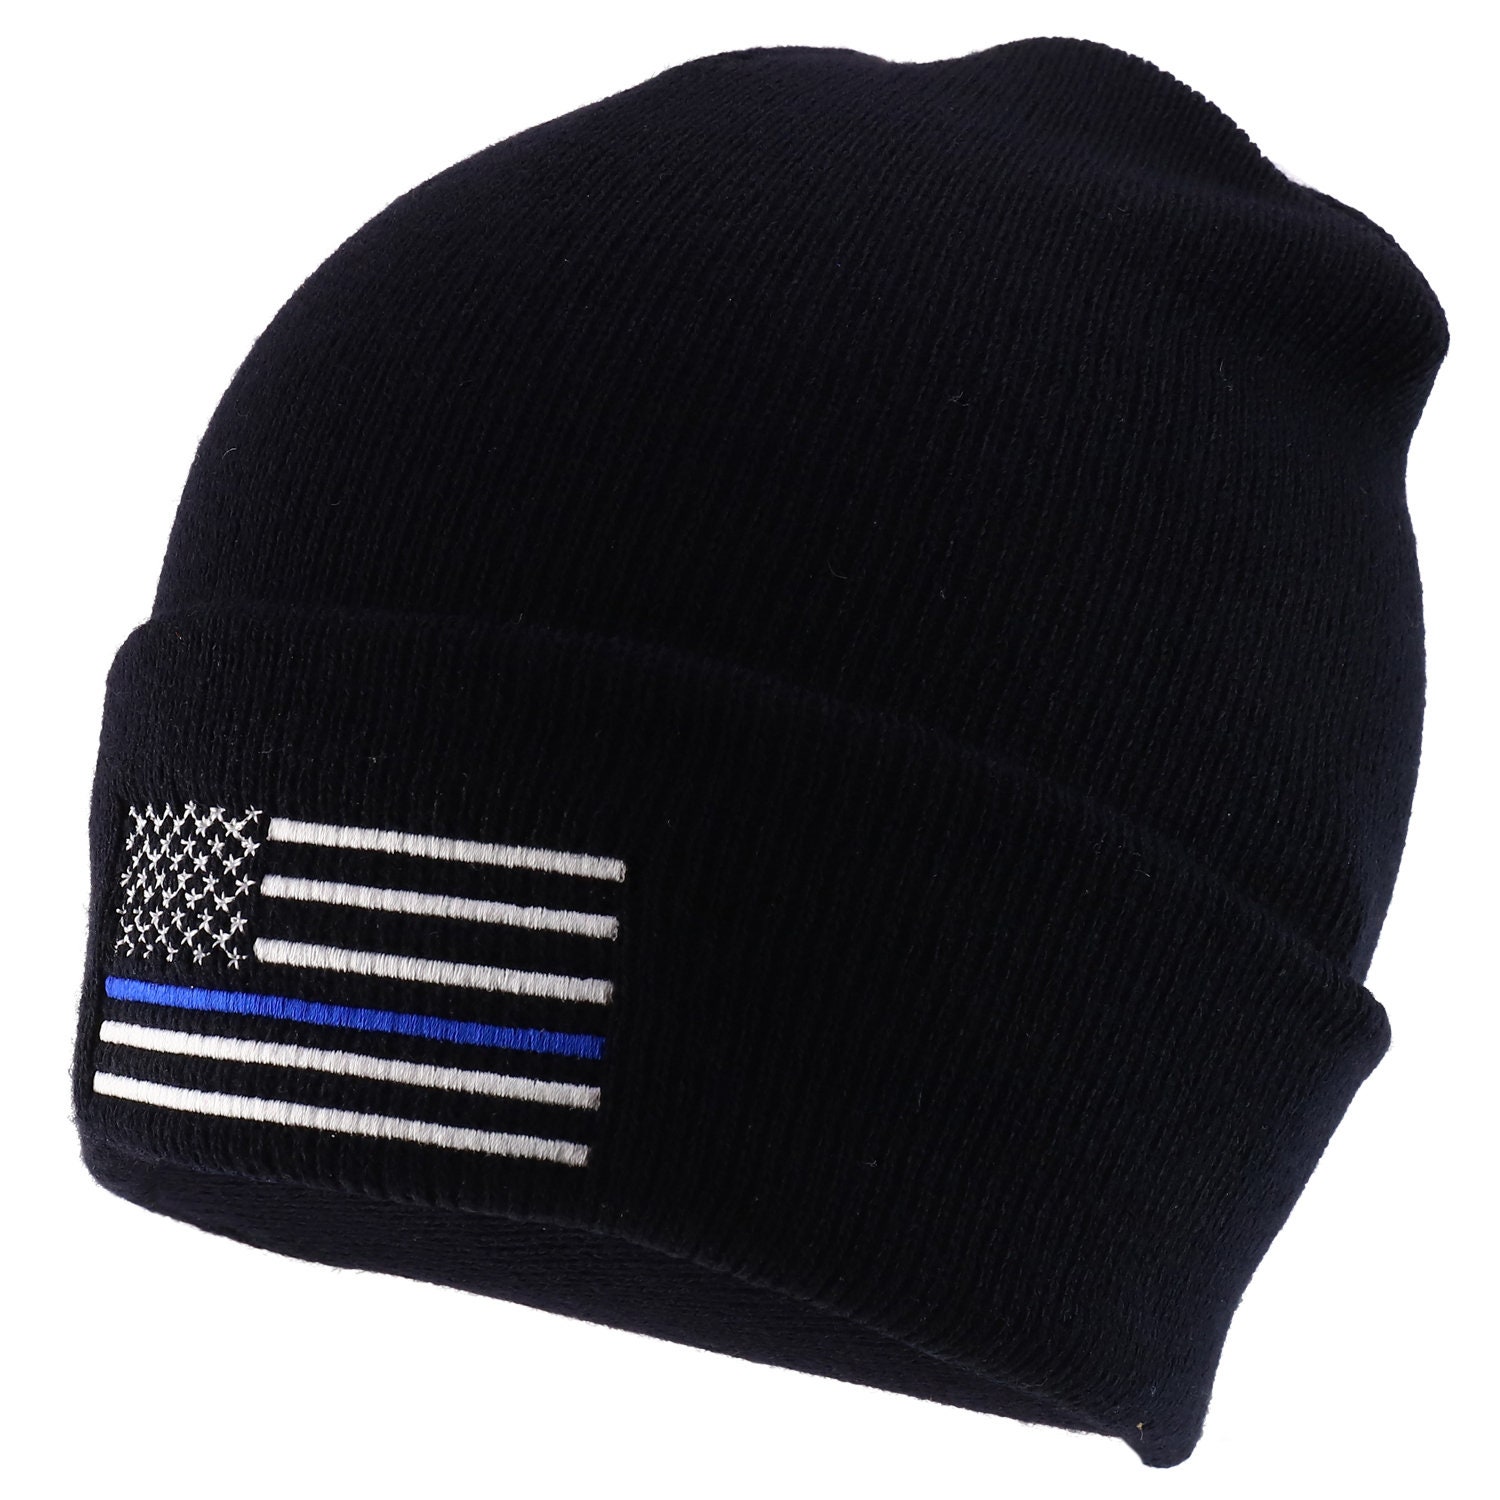 Olive United States U.S Border Patrol Police Cop Knit Cuff Beanie Beanies Hat 